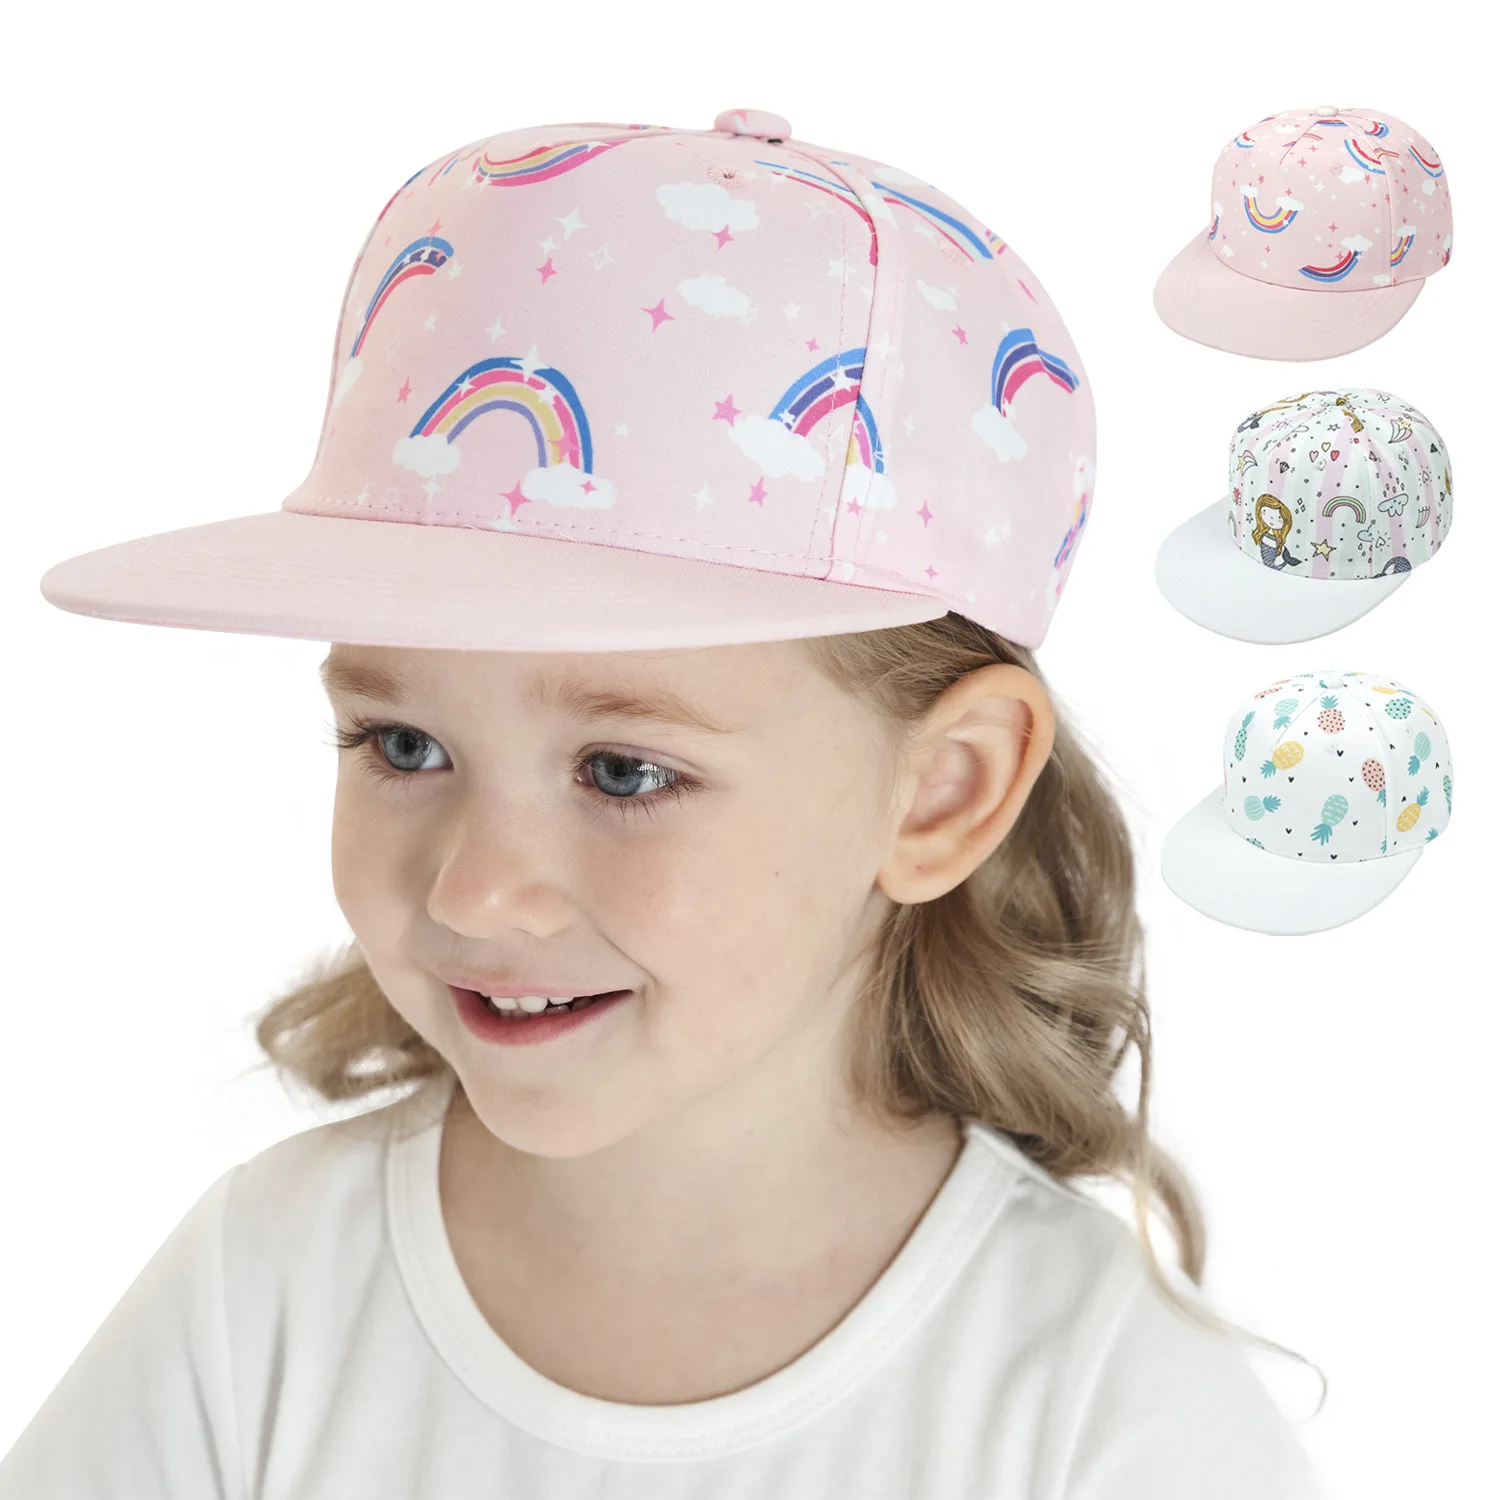 Kids dinosaur print Baseball Cap Outdoor Toddlers Hat Adjustable Trucker Cap Children Sun Hat For Boys Girls Ages 1-8 Years Old 2